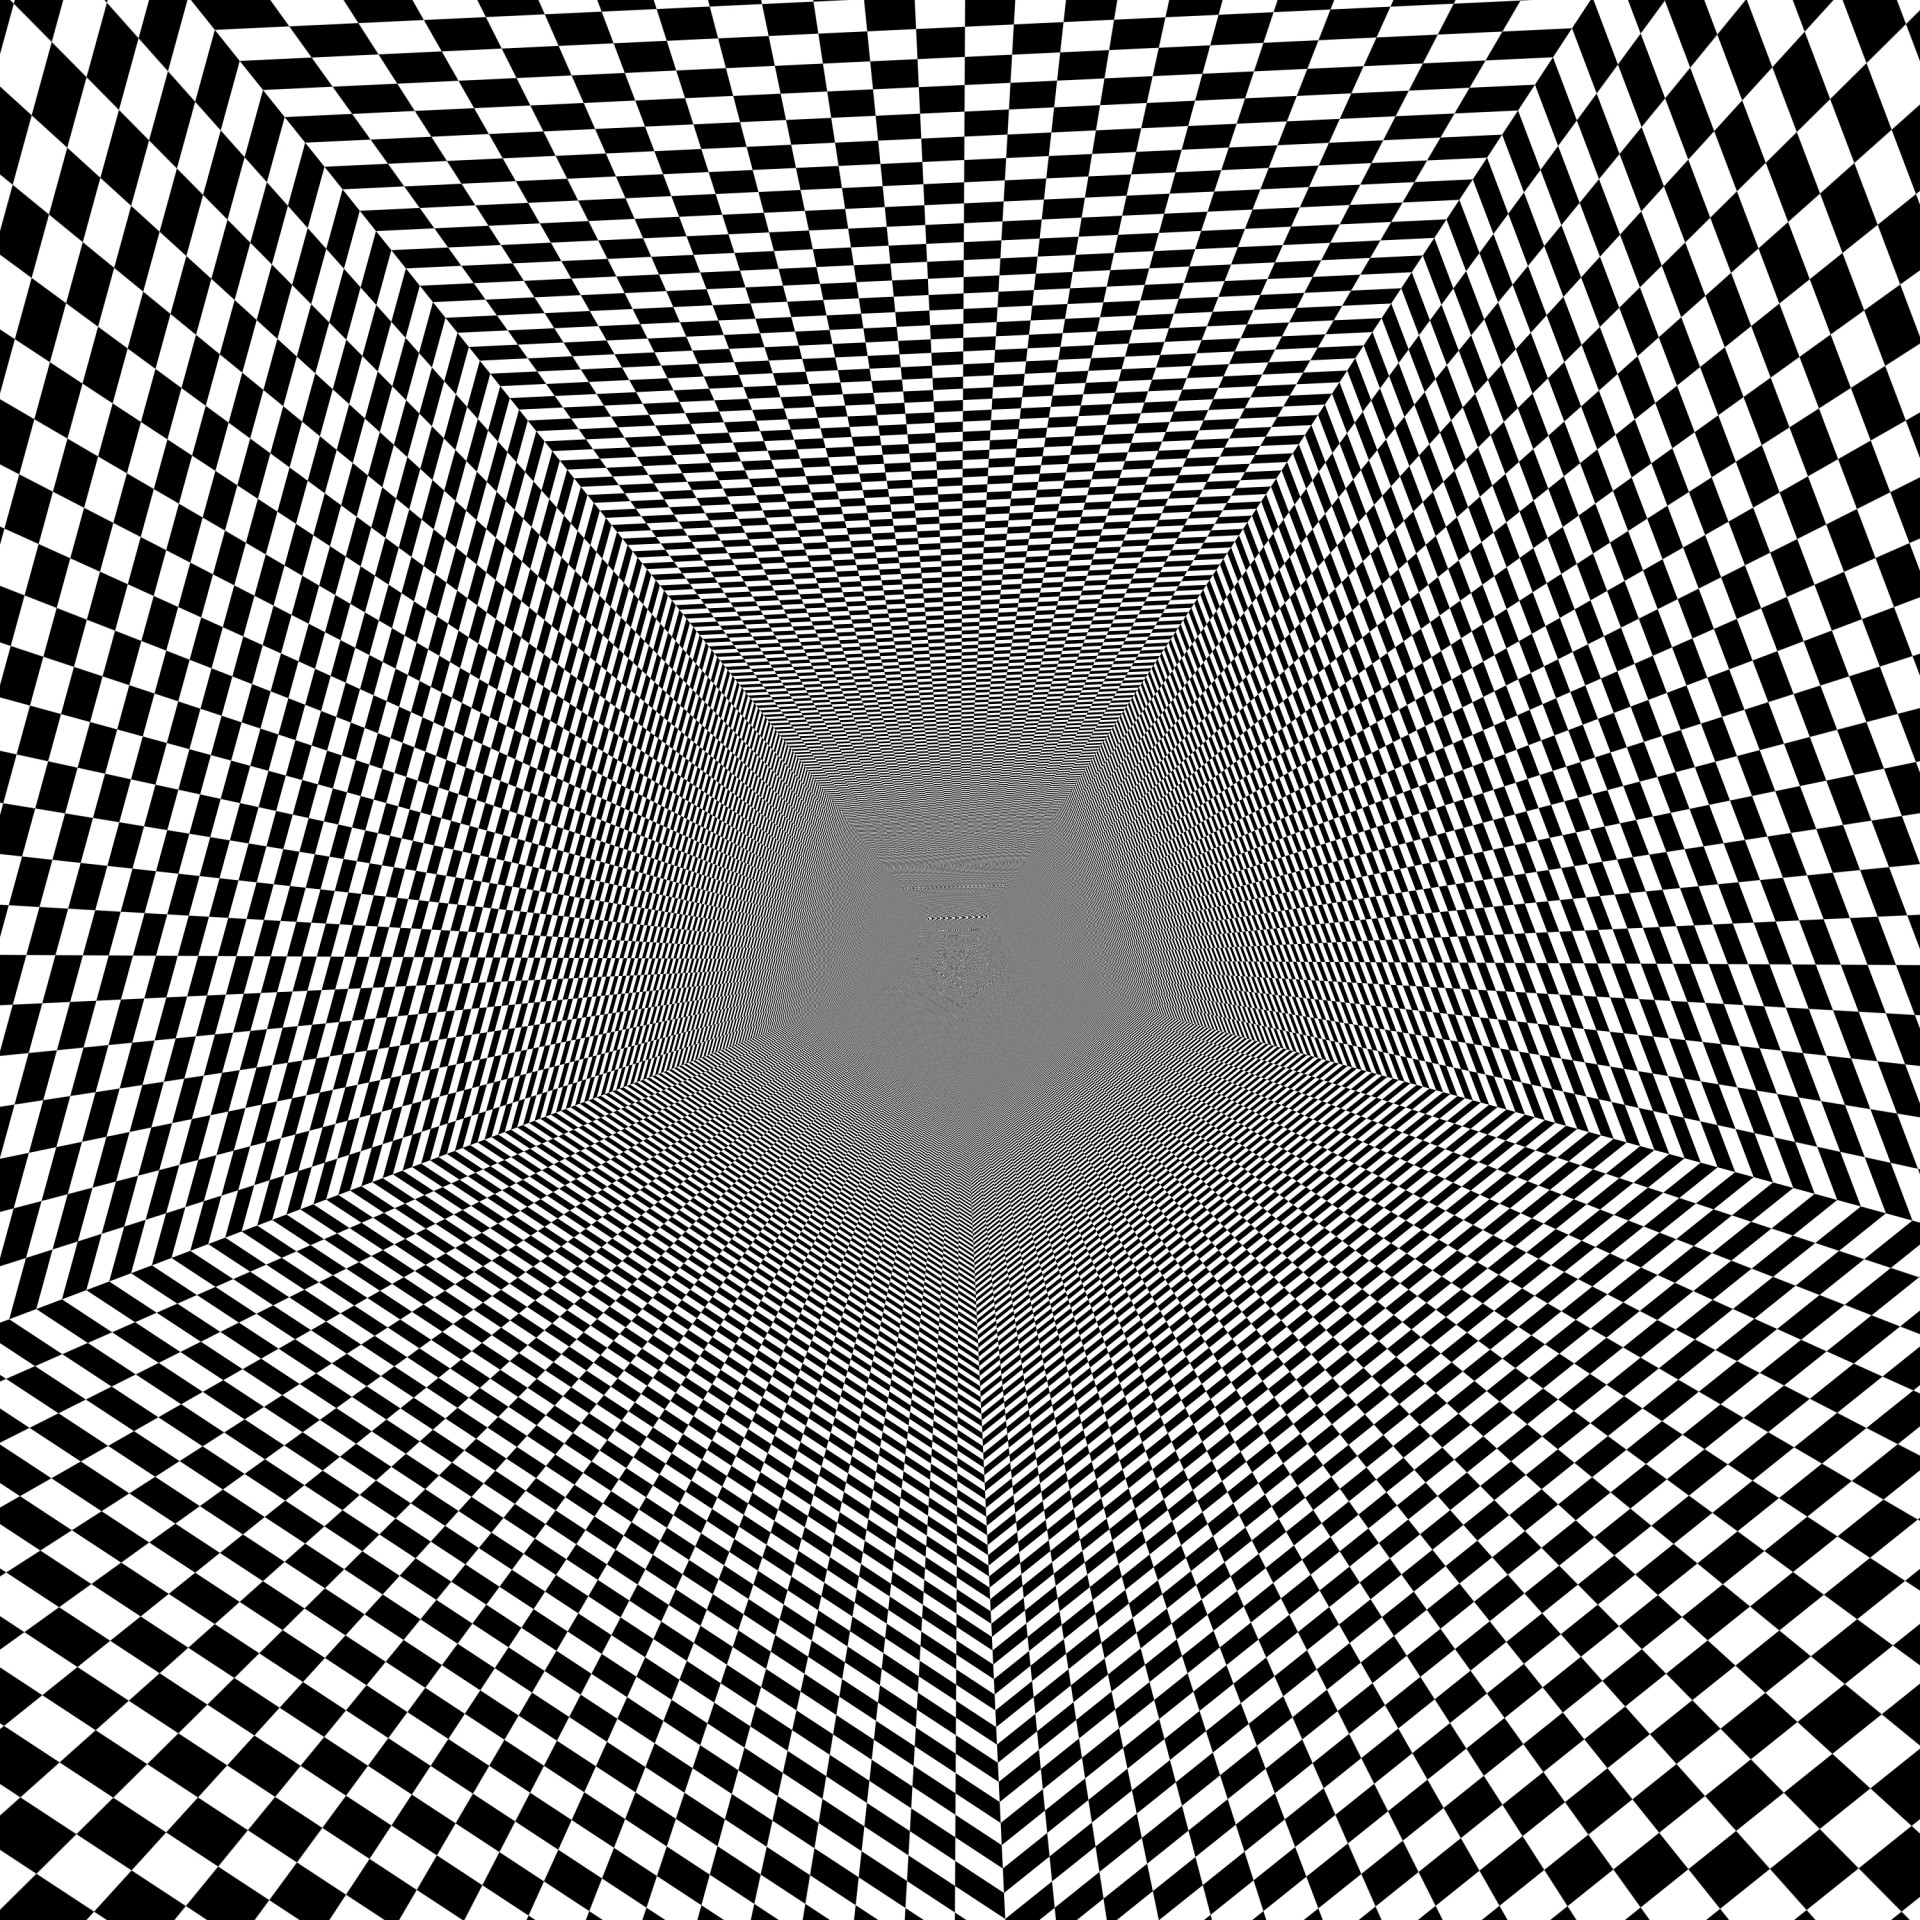 depth illusion pattern free photo